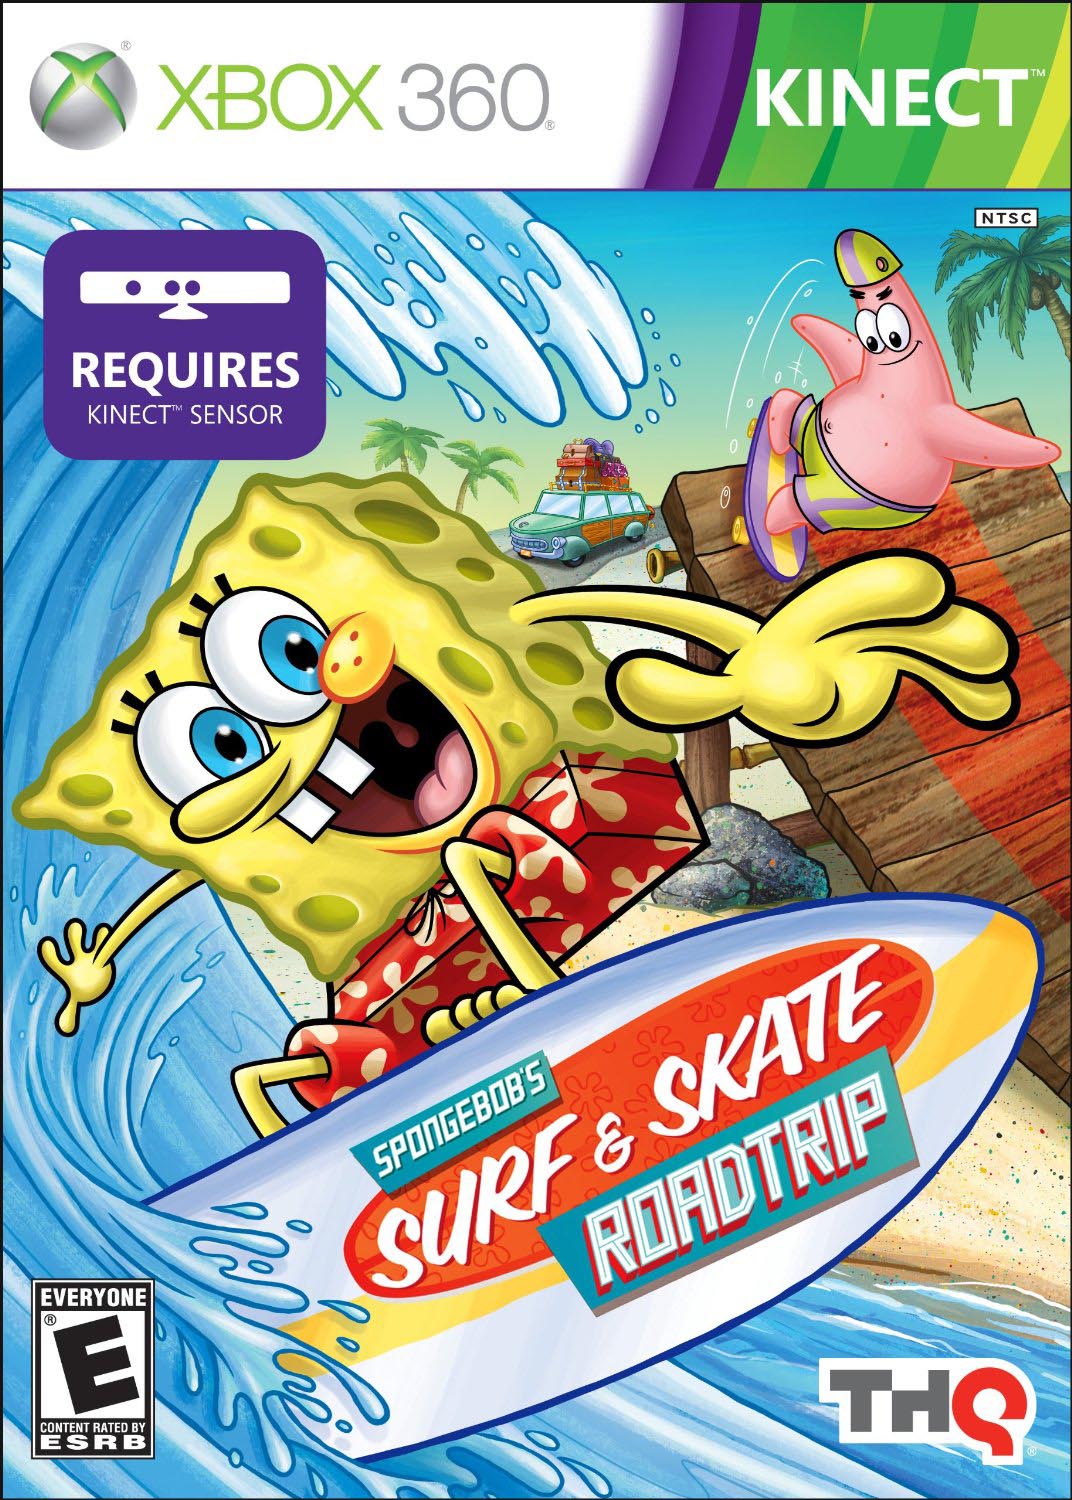 Spongebob Surf and Skate Roadtrip Kinect